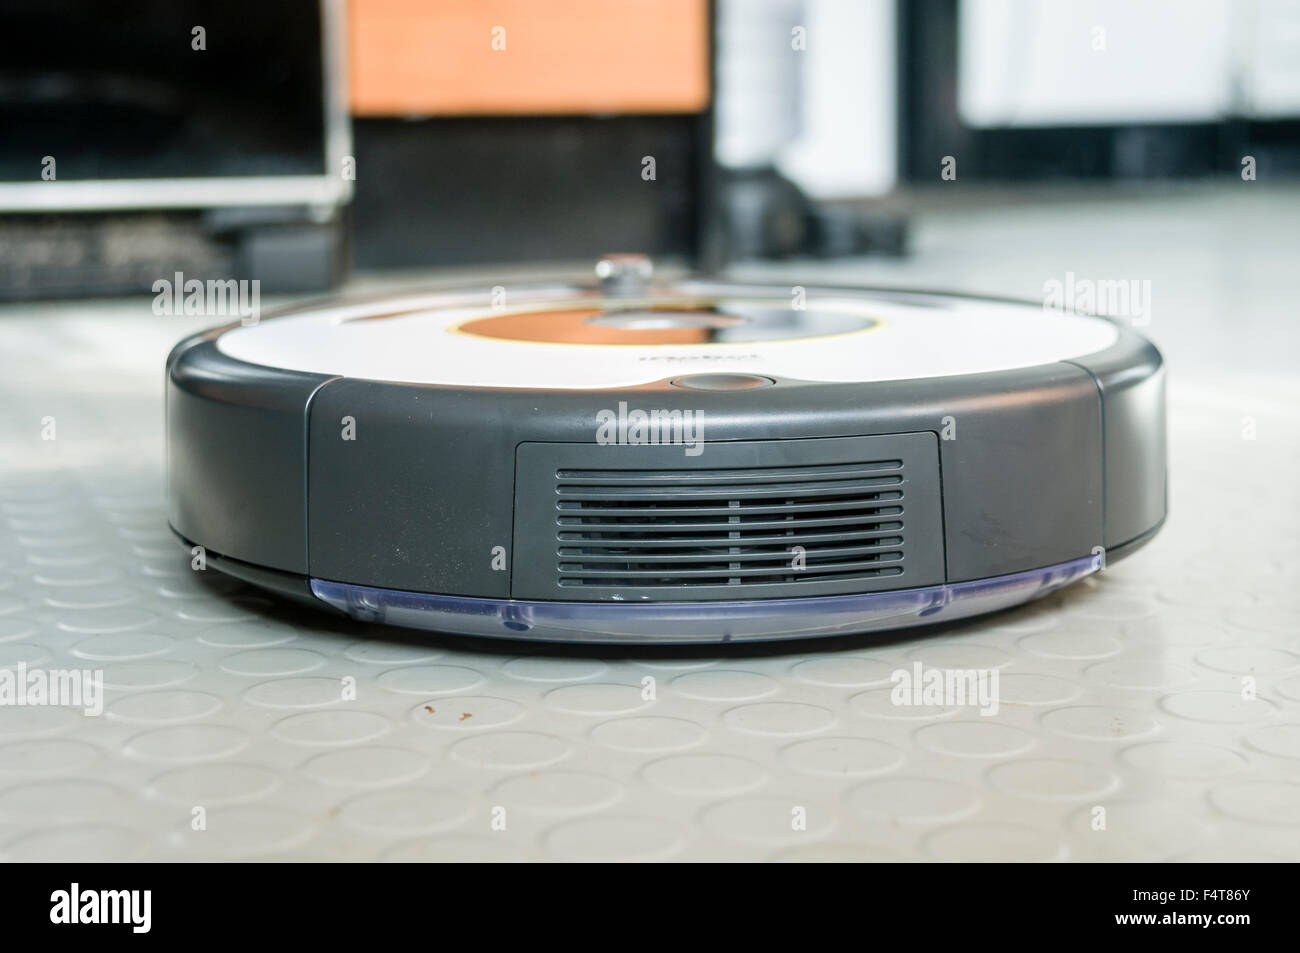 An iRobot Roomba robotic vacuum cleaner cleaning a rubber vinyl kitchen  floor Stock Photo - Alamy